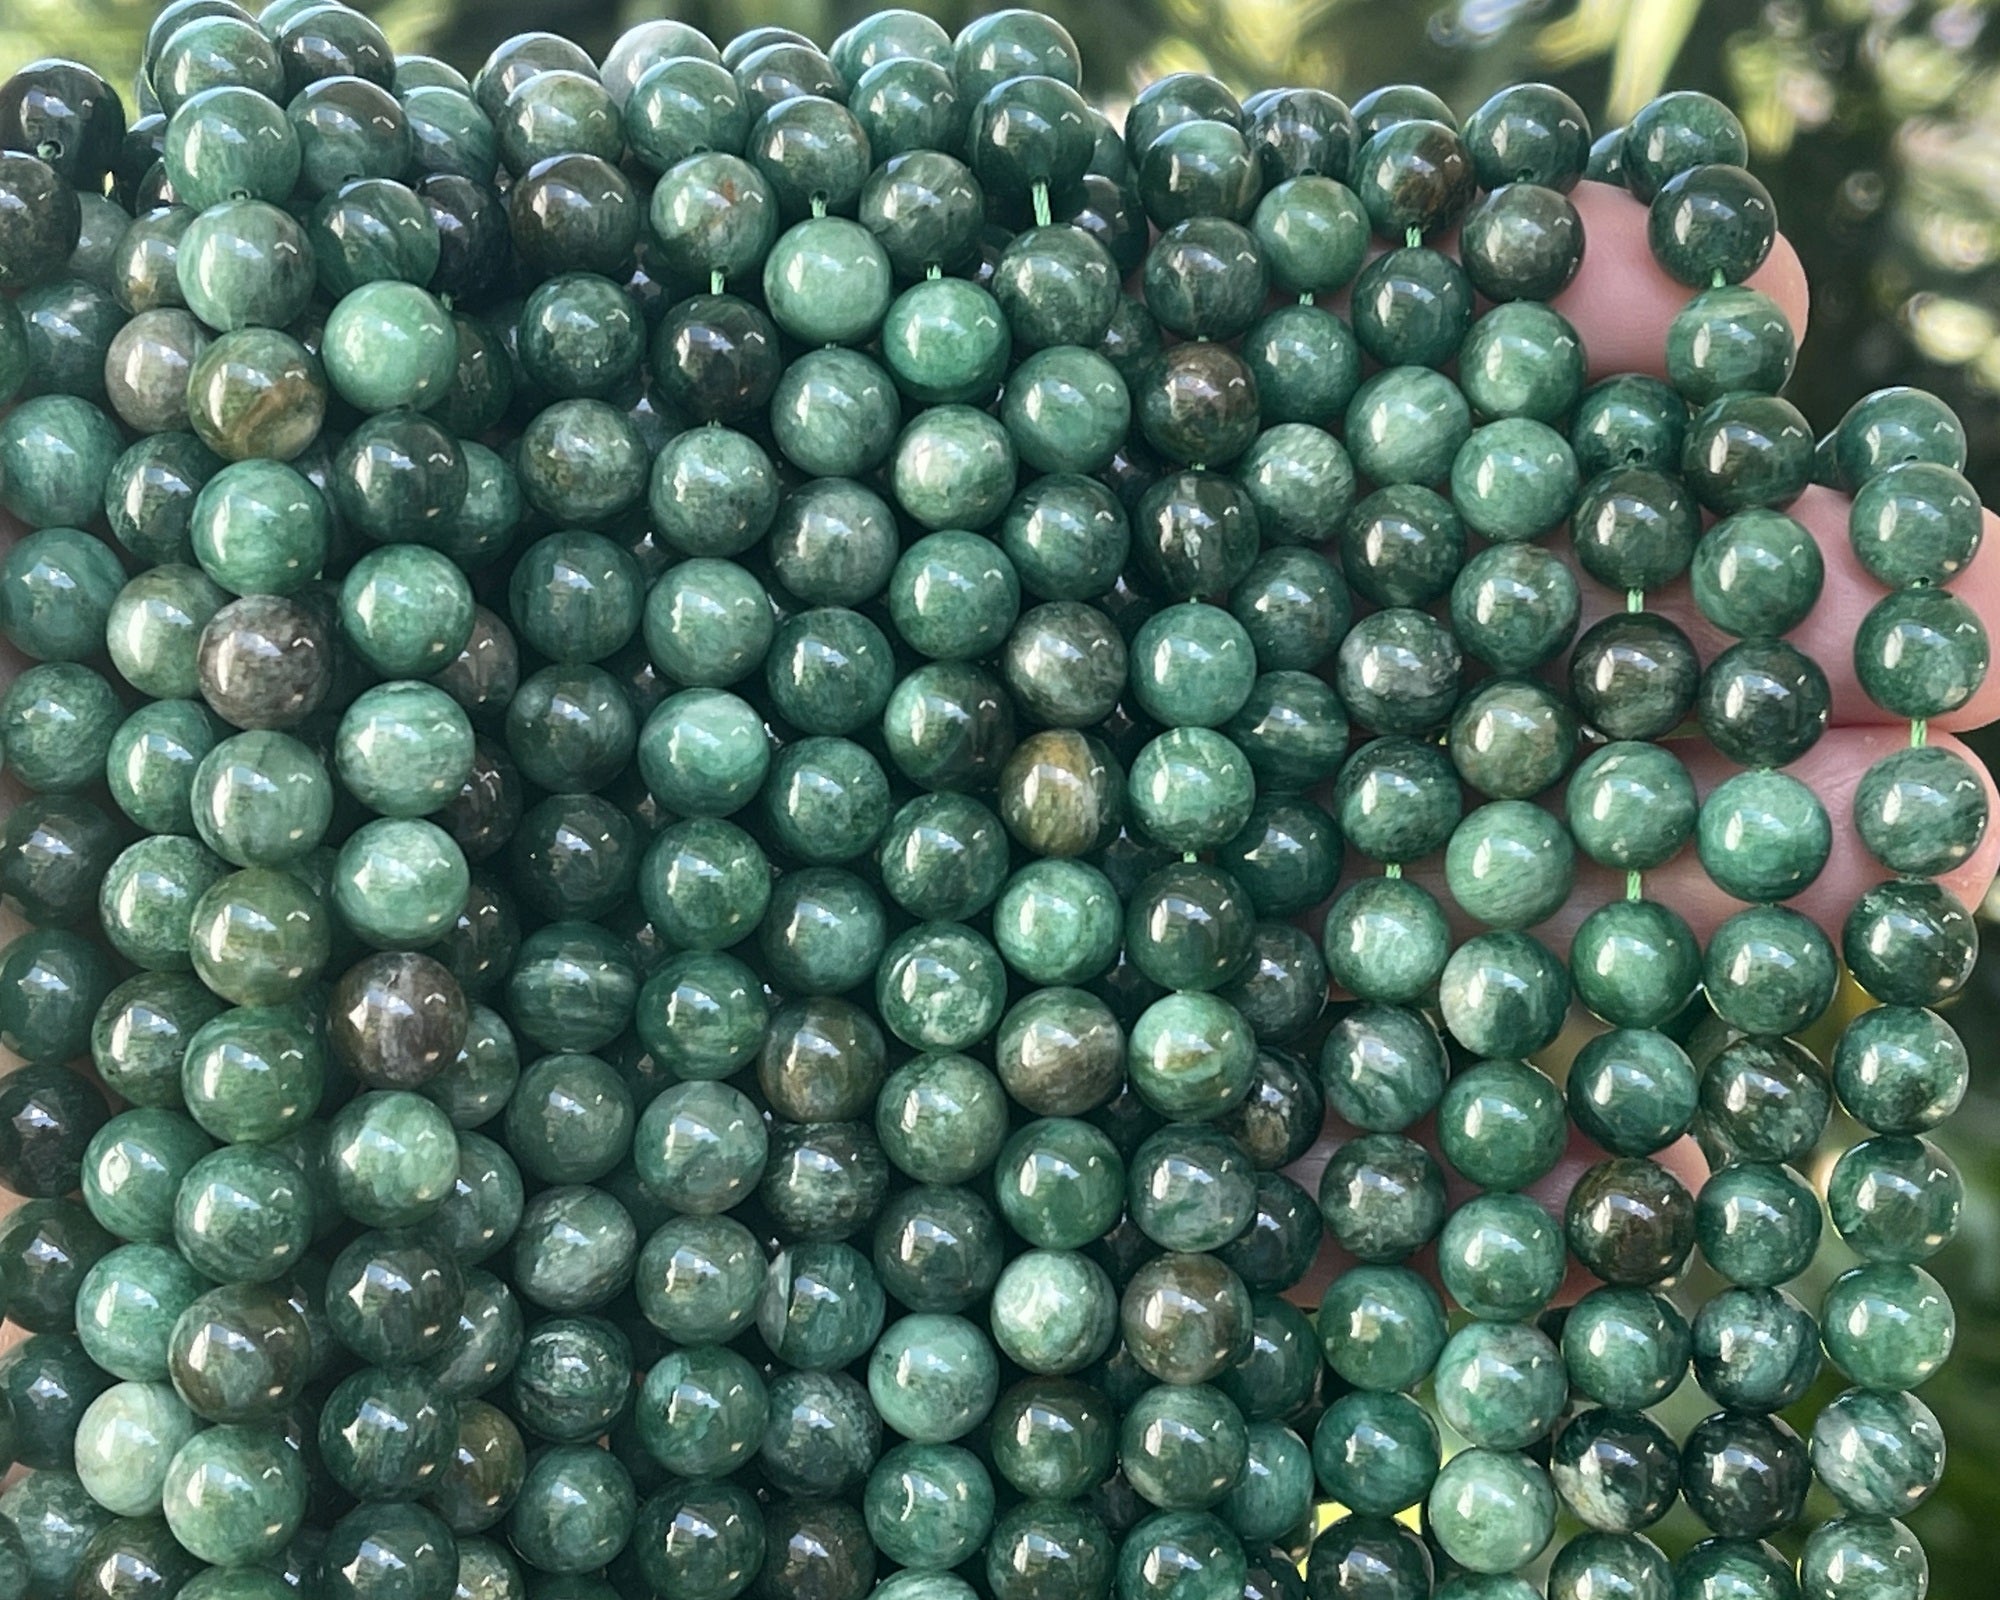 Green Mica Fuchsite 8mm round natural gemstone beads 15" strand